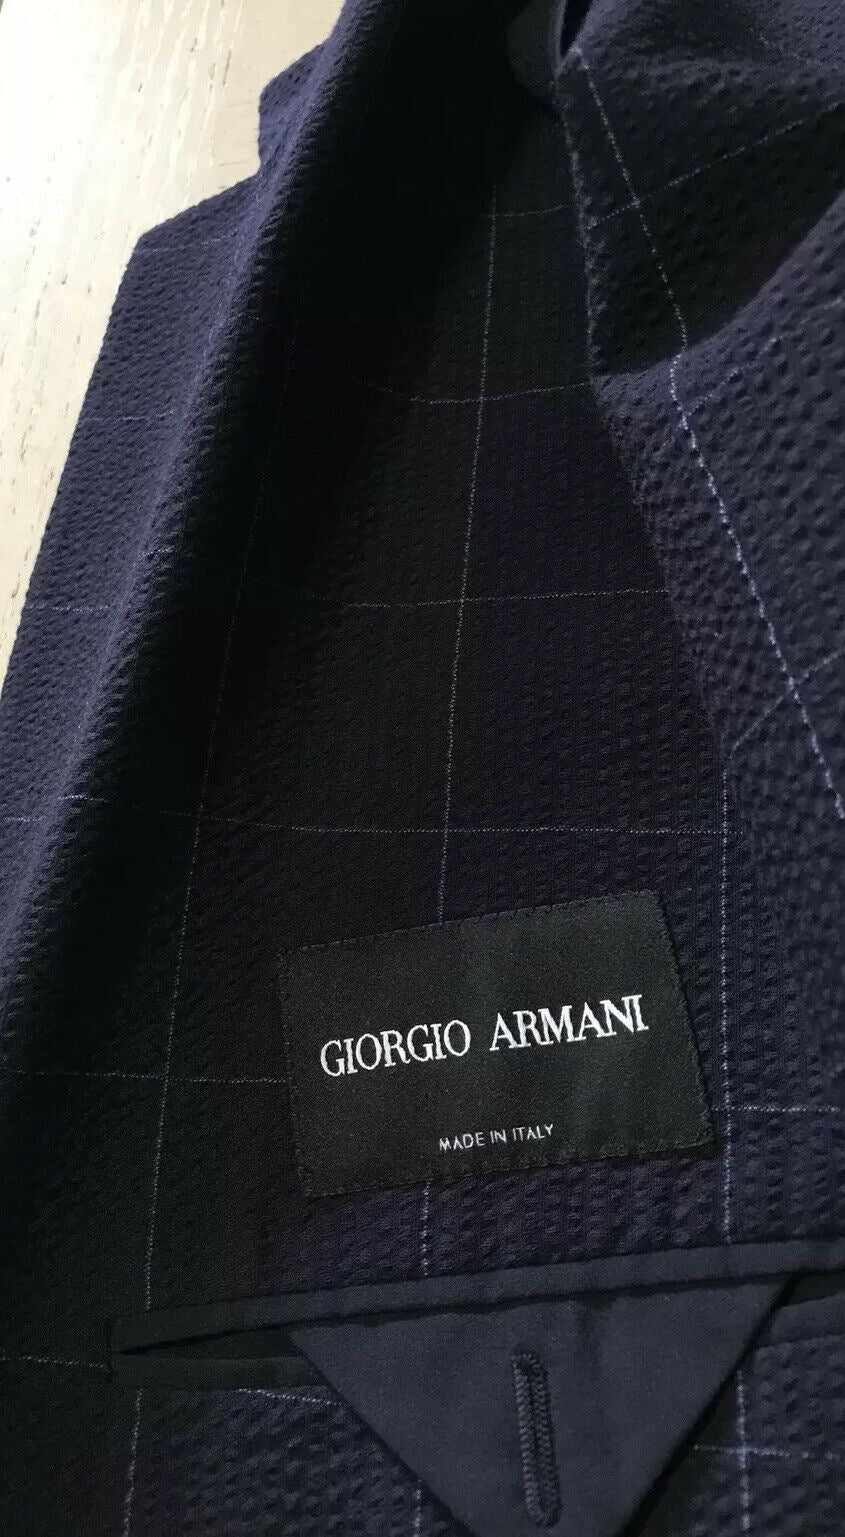 New $3200 Giorgio Armani Men’s Suit DK Blue 40 US/50 Eu Italy